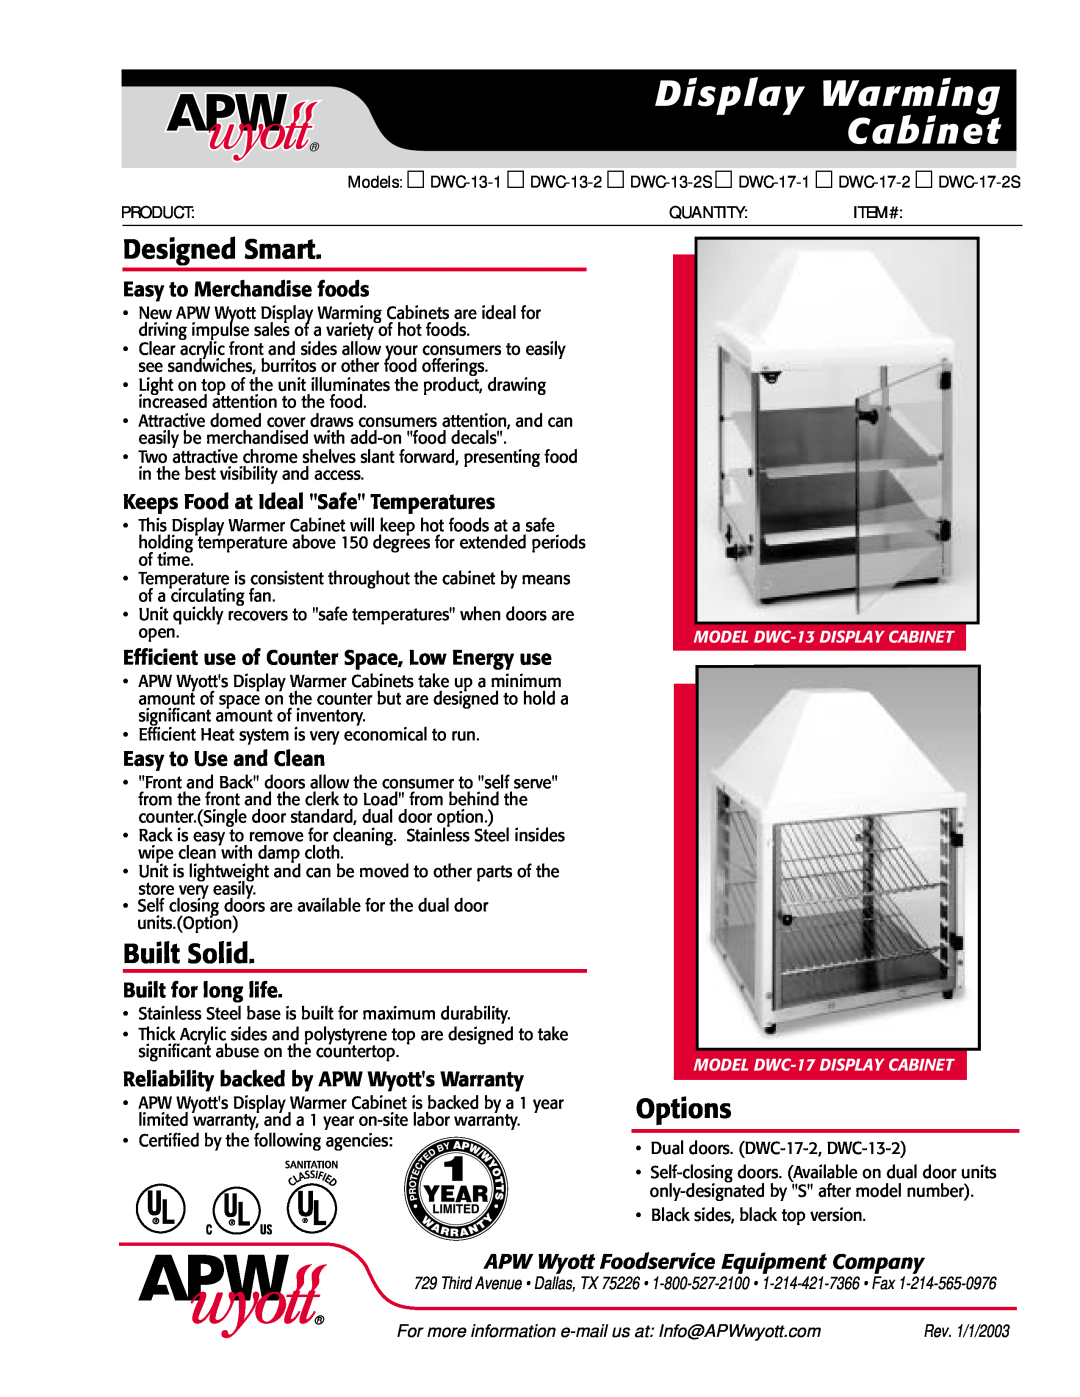 APW Wyott DWC-13-2 warranty Display Warming Cabinet, APW Wyott Foodservice Equipment Company, Designed Smart, Built Solid 